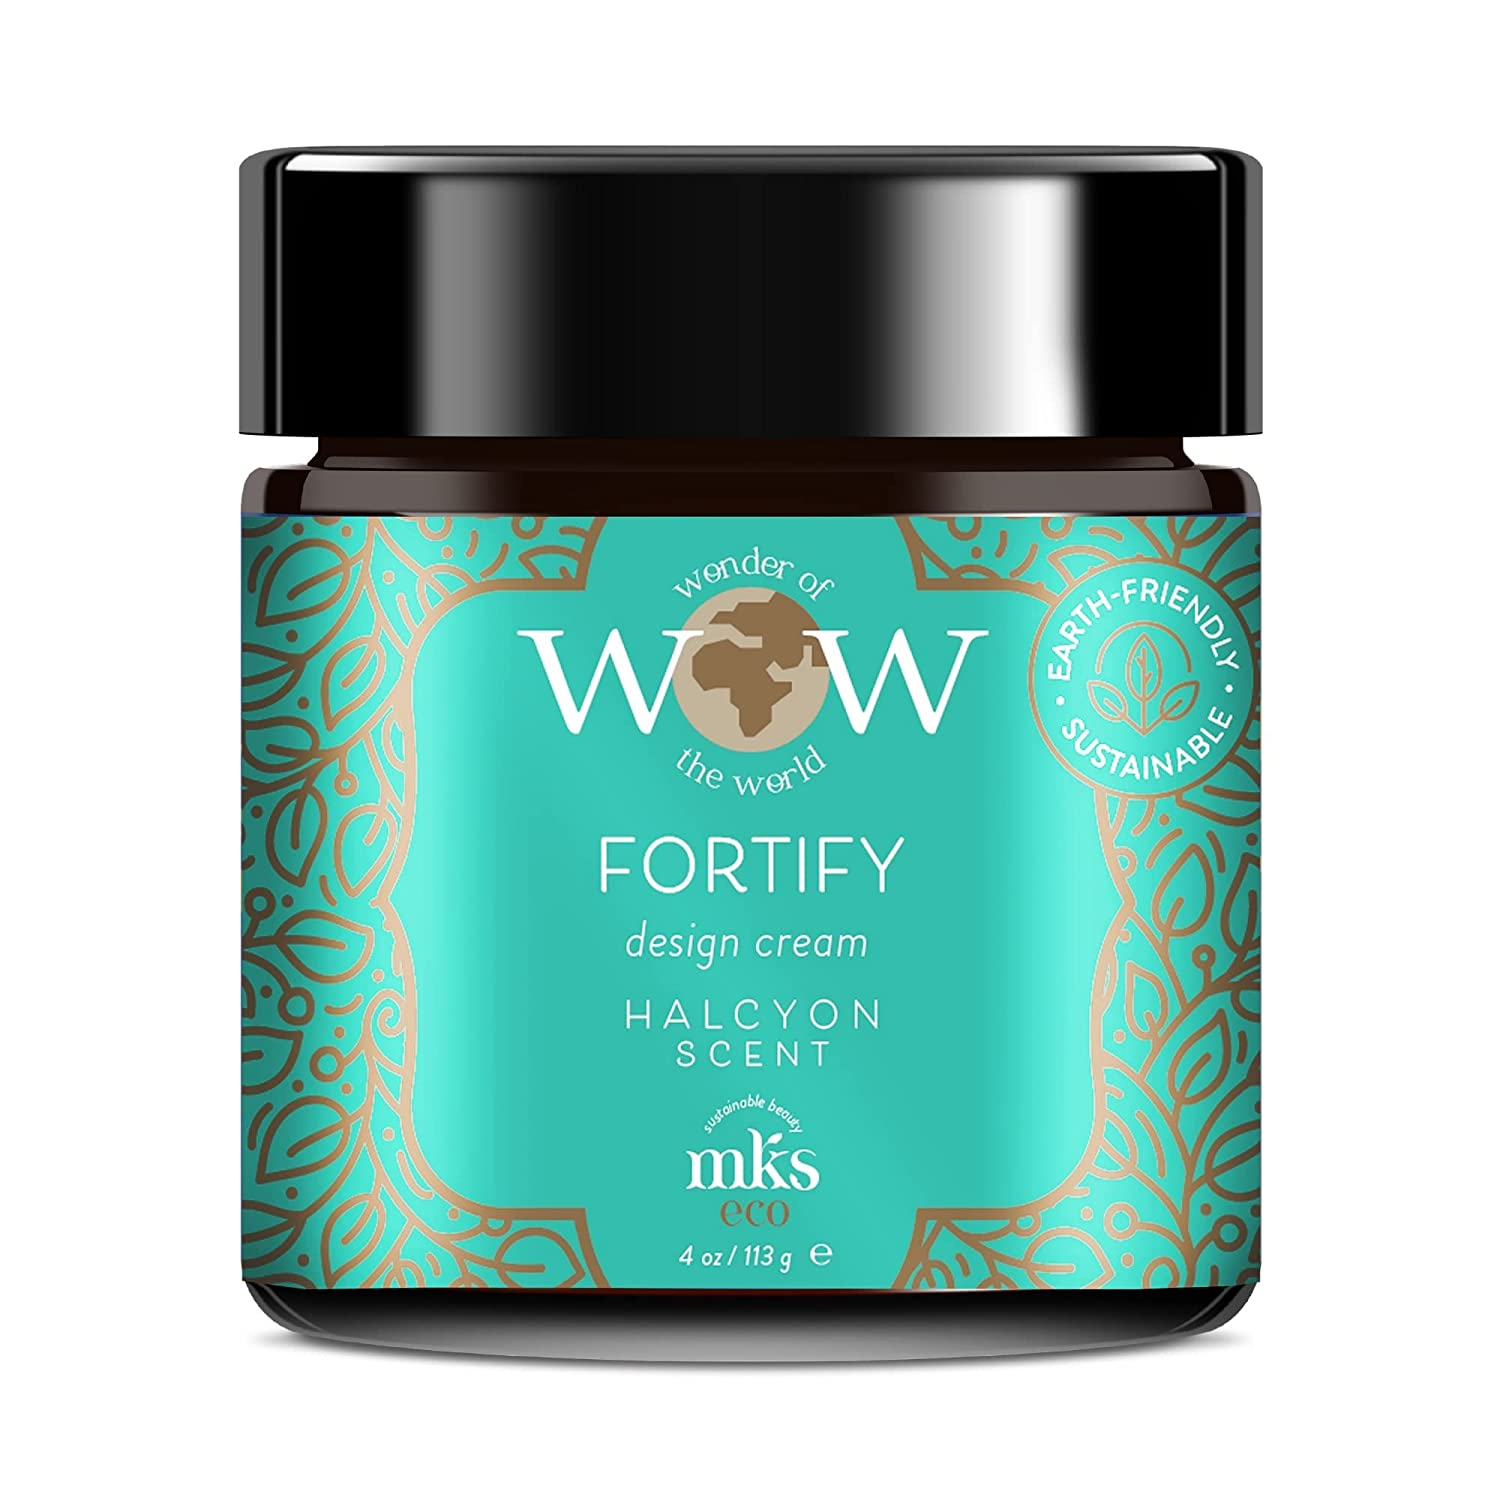 MKS eco WOW Fortify Design Cream, 4 fl oz - $18.00